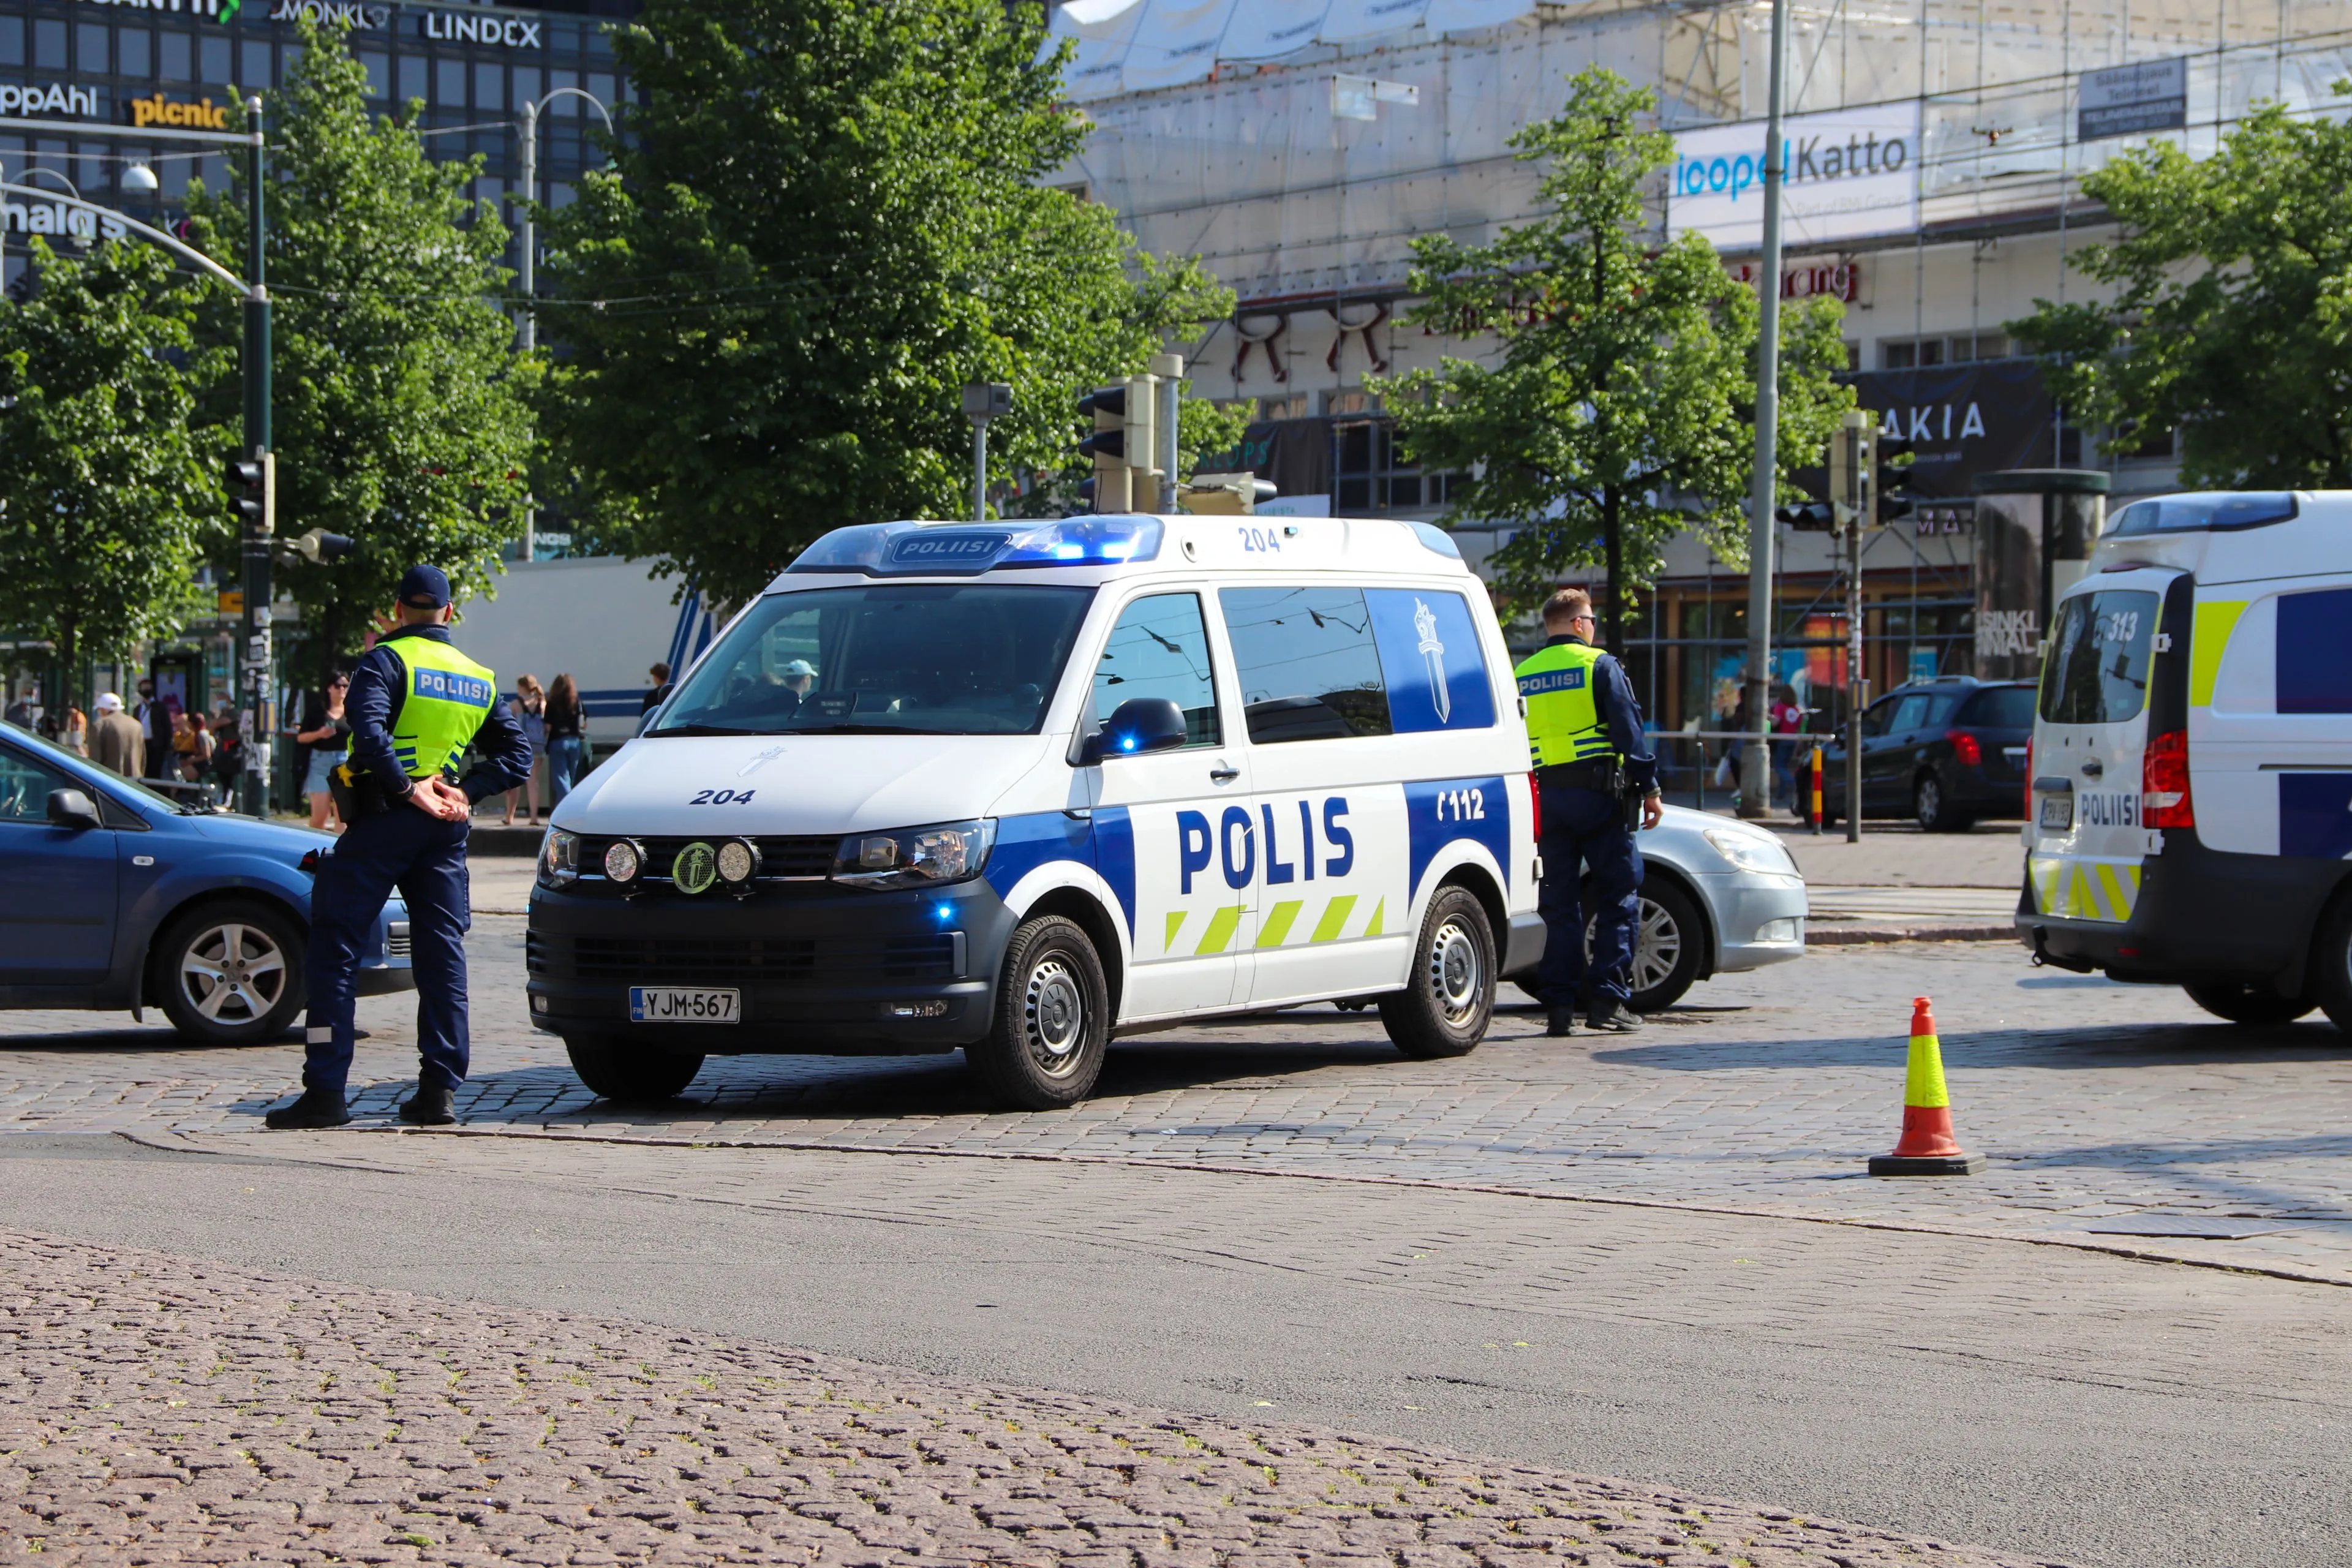 police directing traffic during extinction rebellion protest in helsinki finland 2021 june